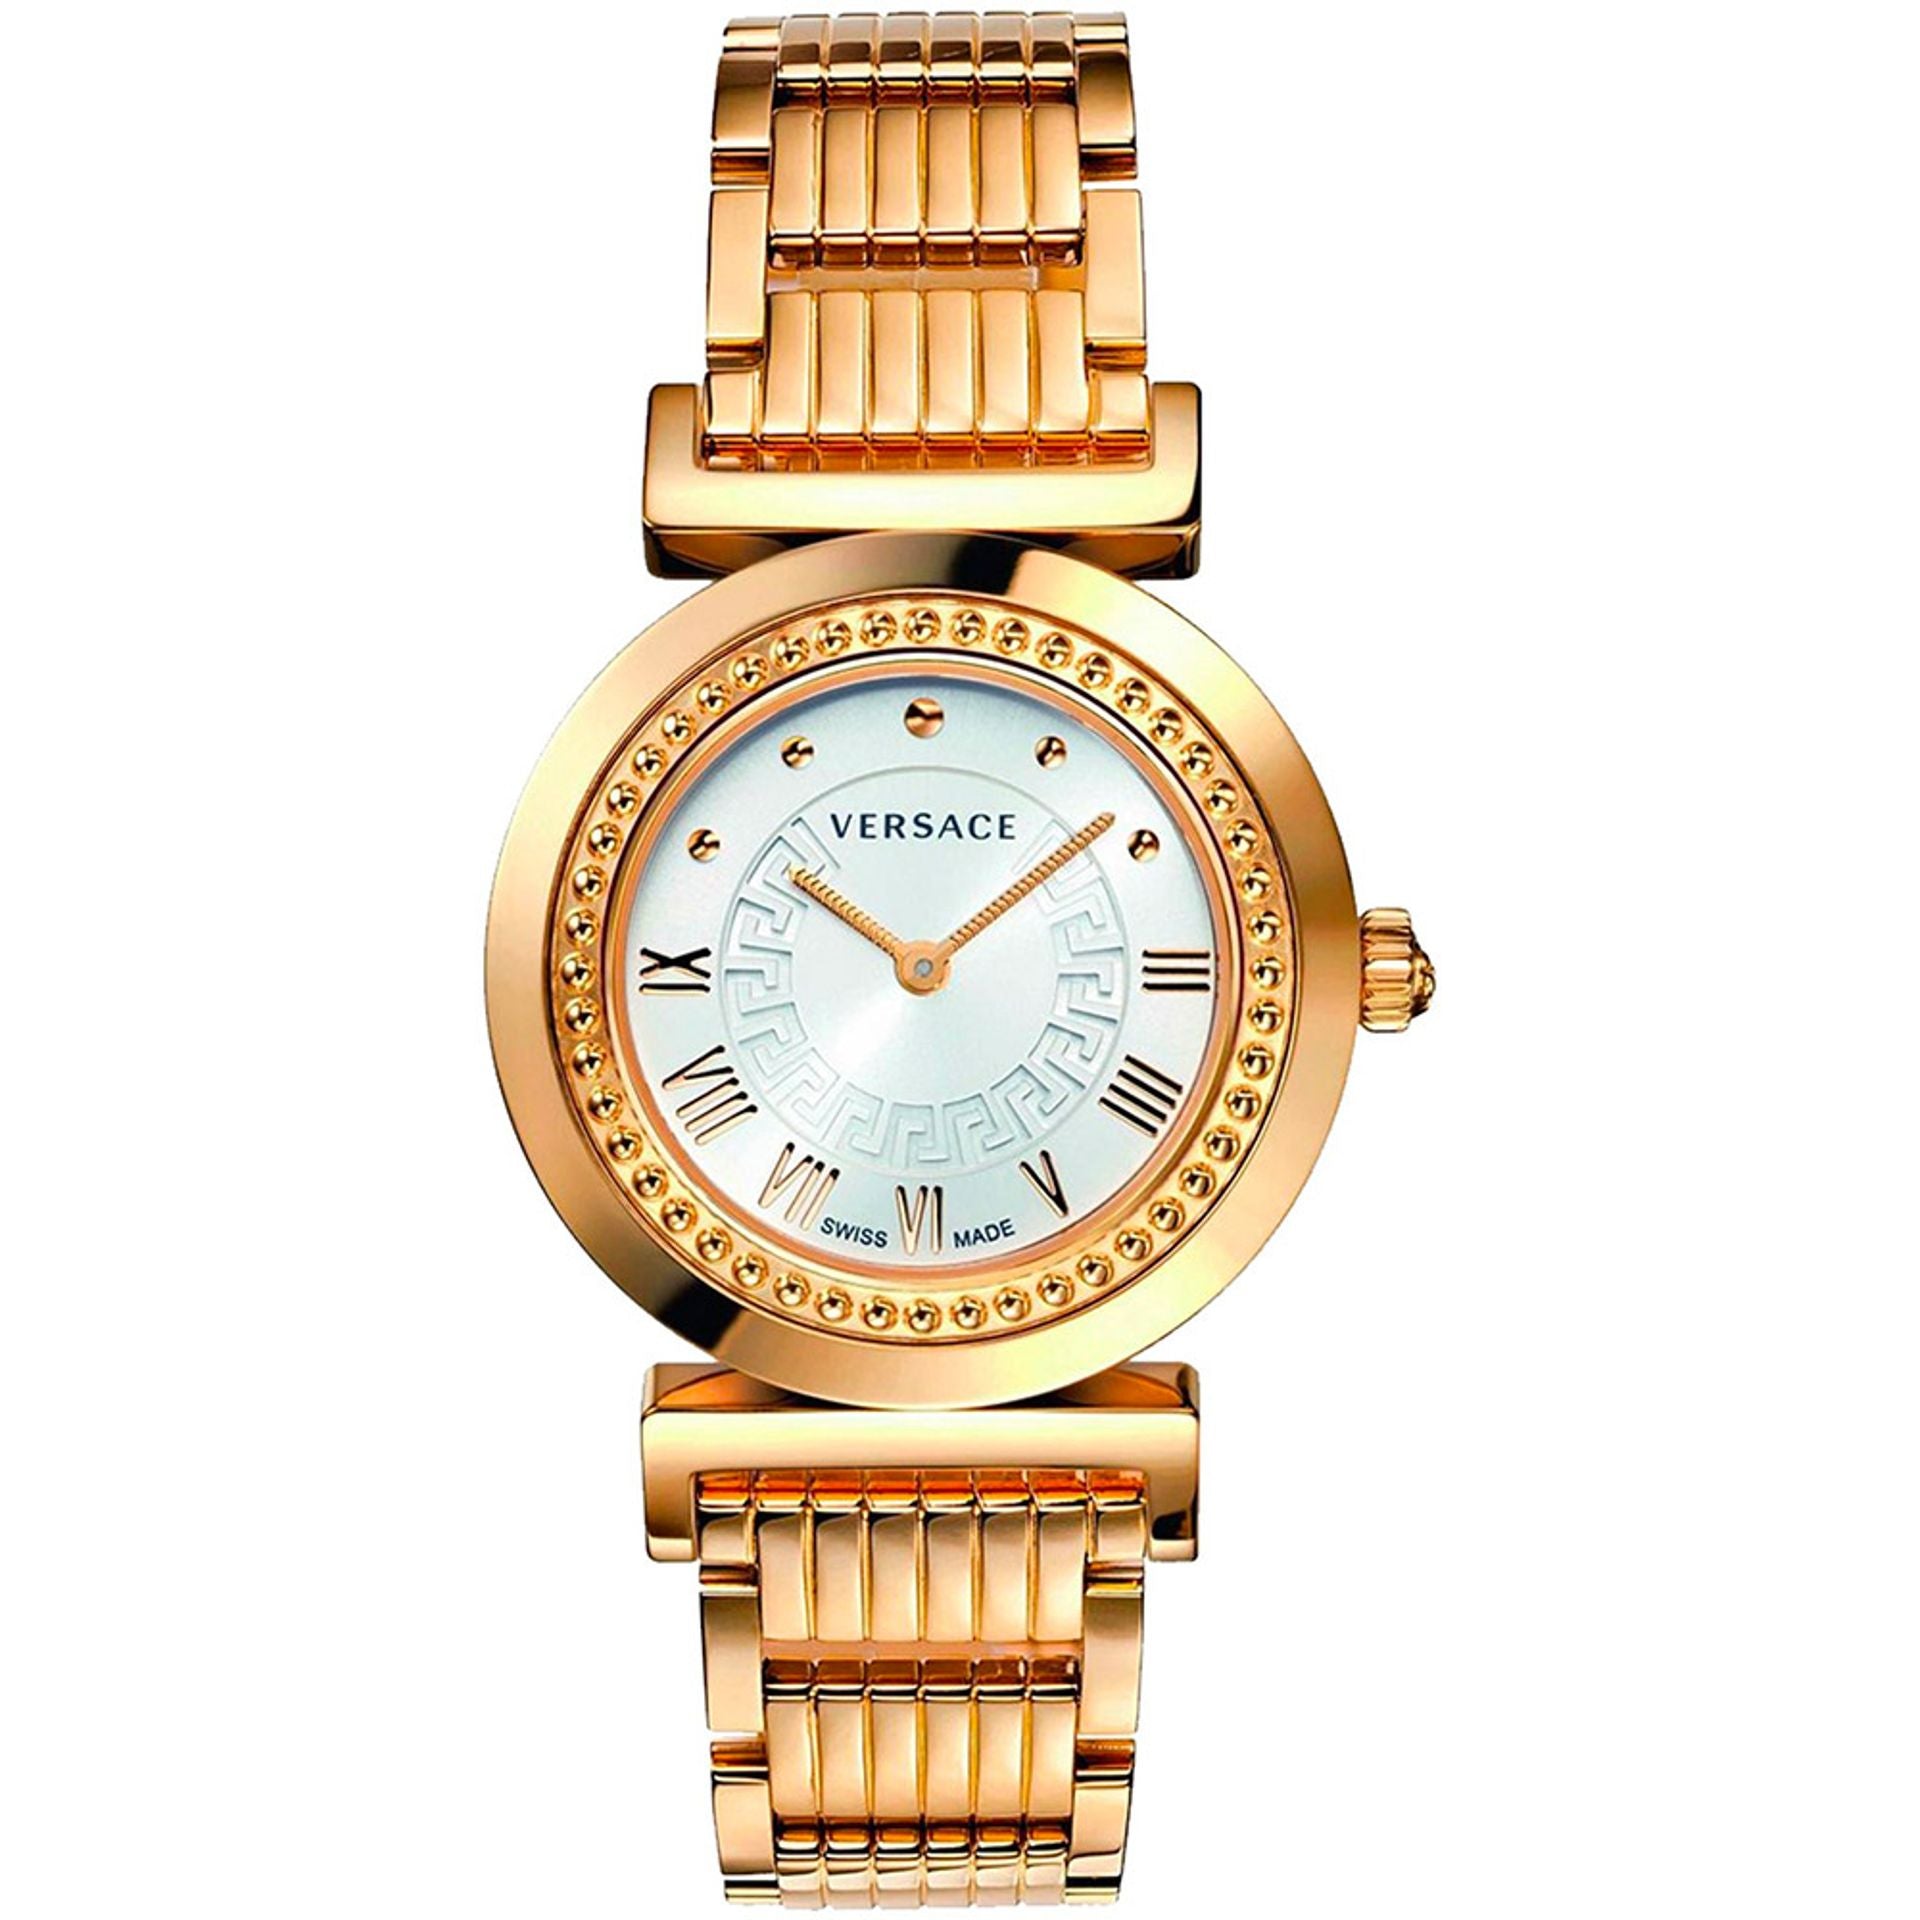 Versace Golden Edition Quartz Watch - 35mm